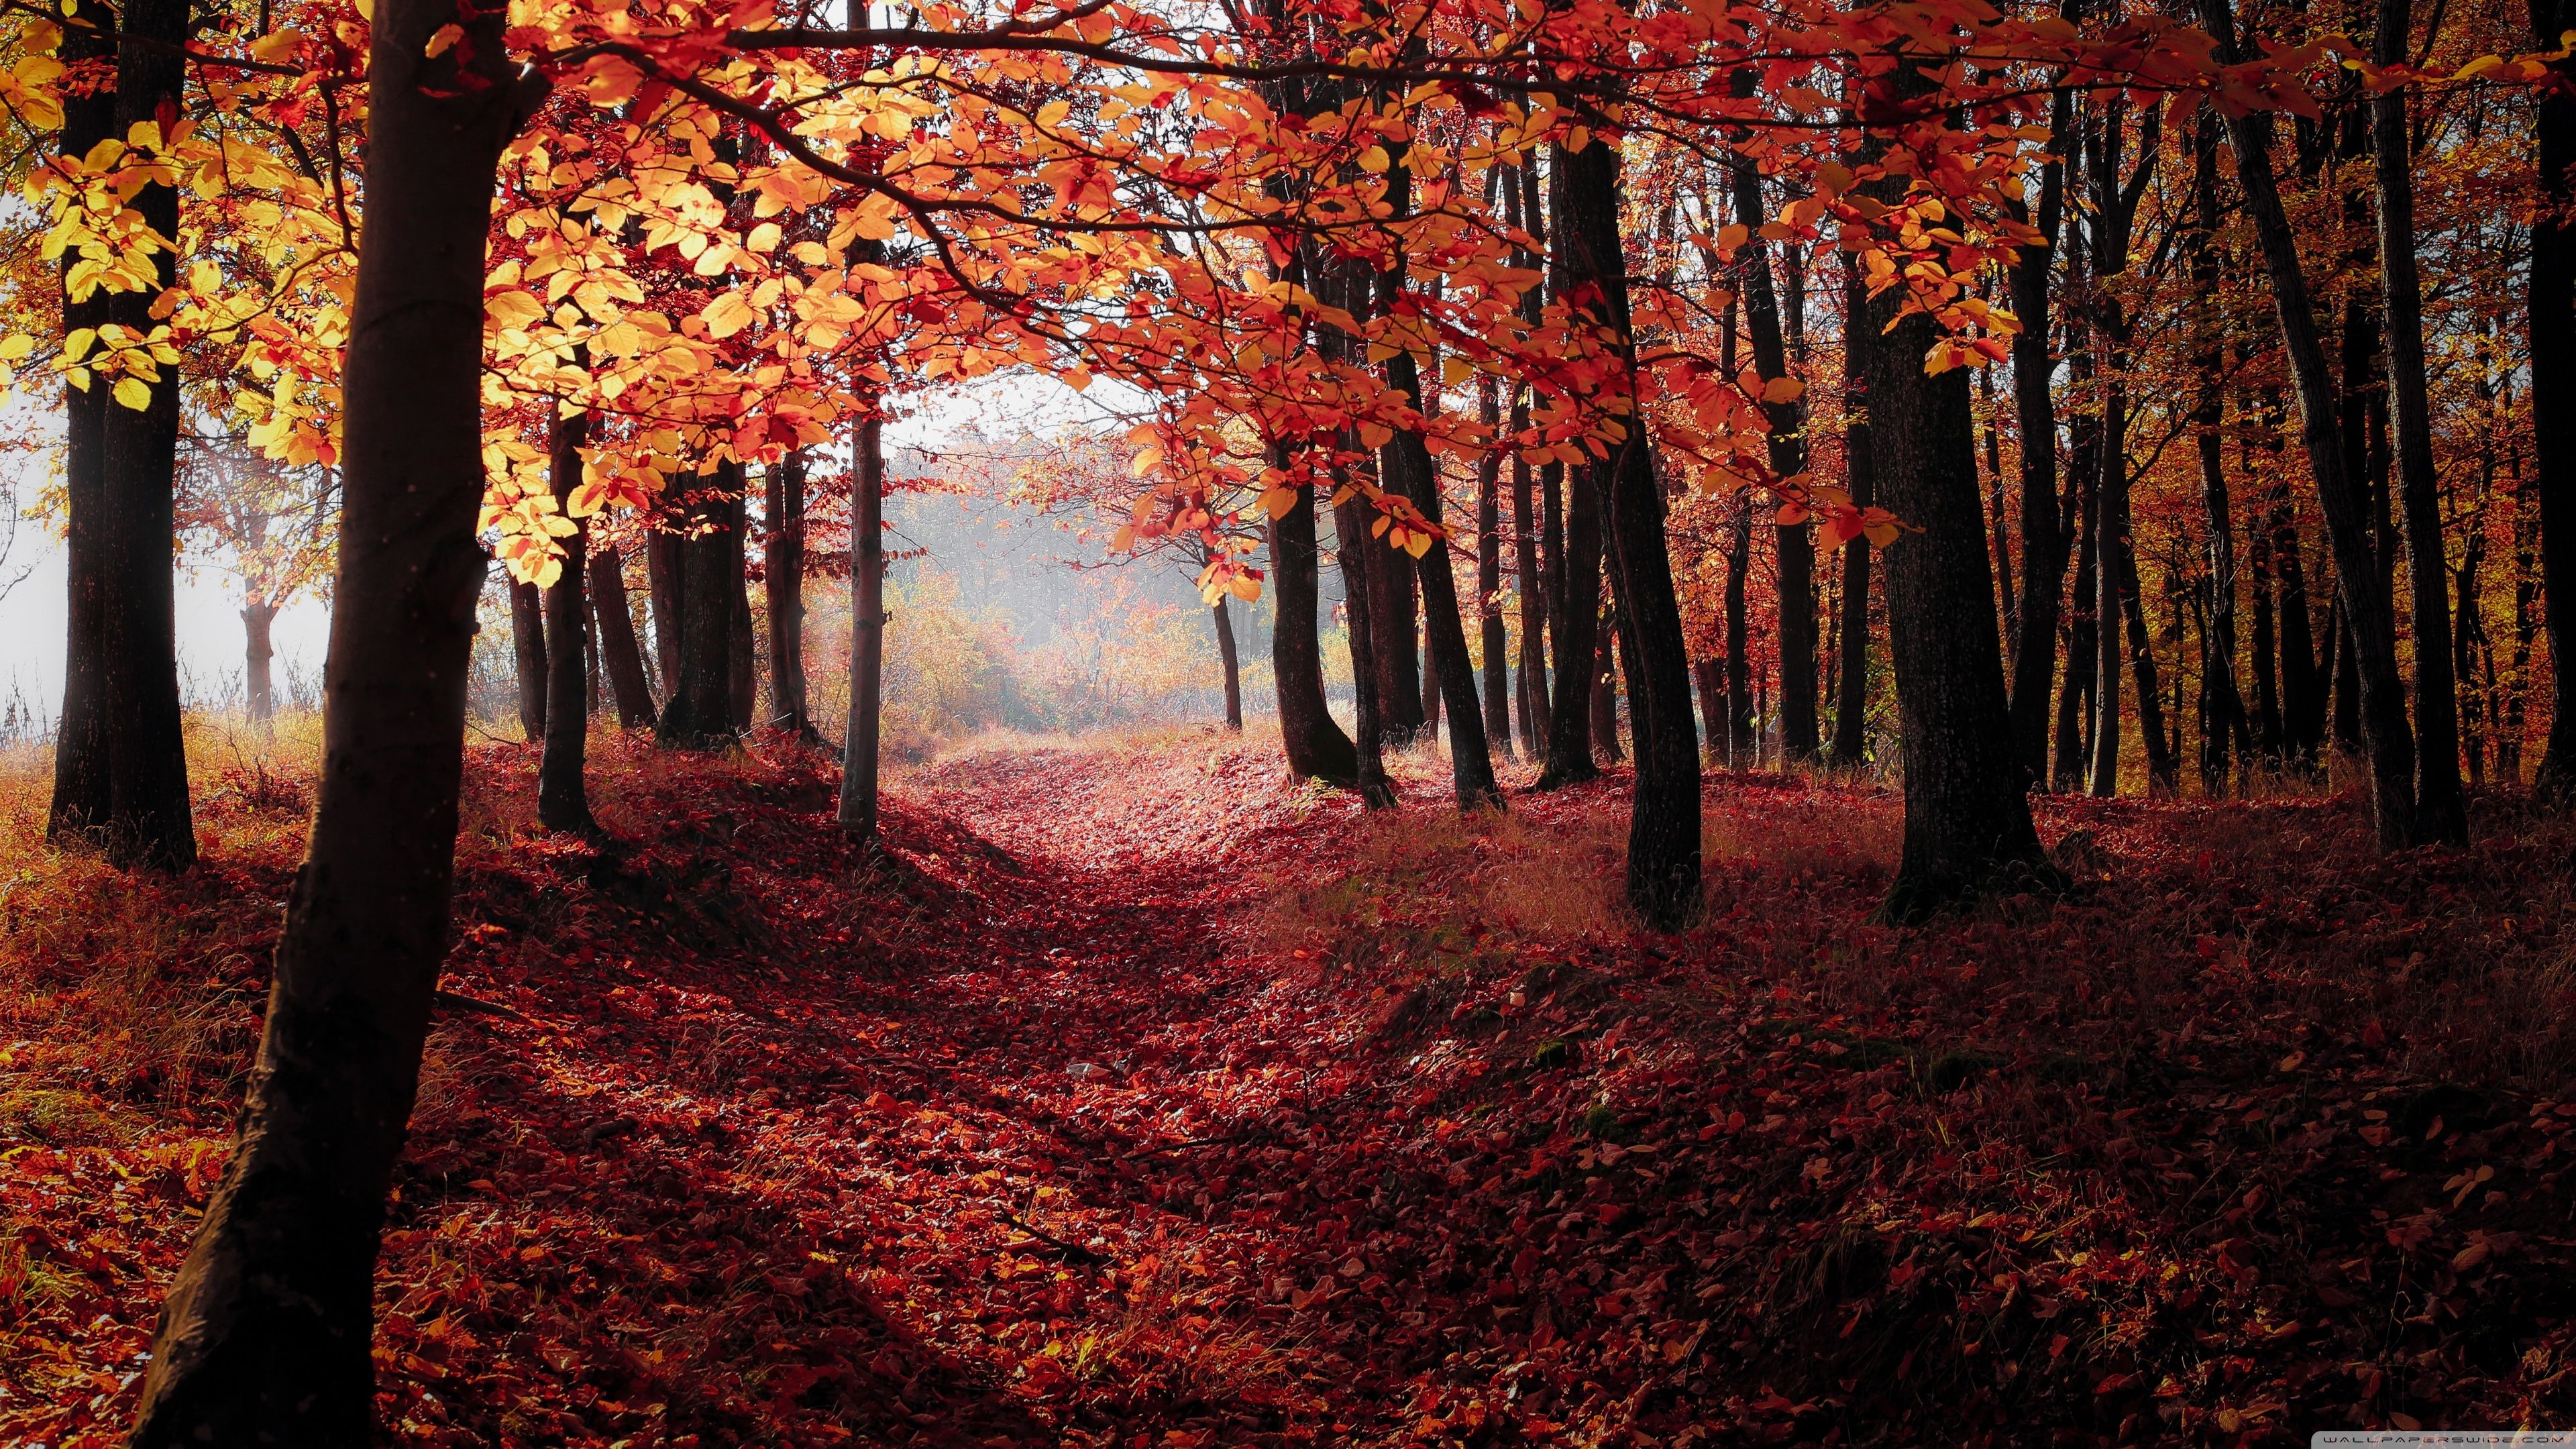 Autumn, Forest Trees, Red Leaves Ultra HD Desktop Background Wallpaper for 4K UHD TV, Widescreen & UltraWide Desktop & Laptop, Tablet